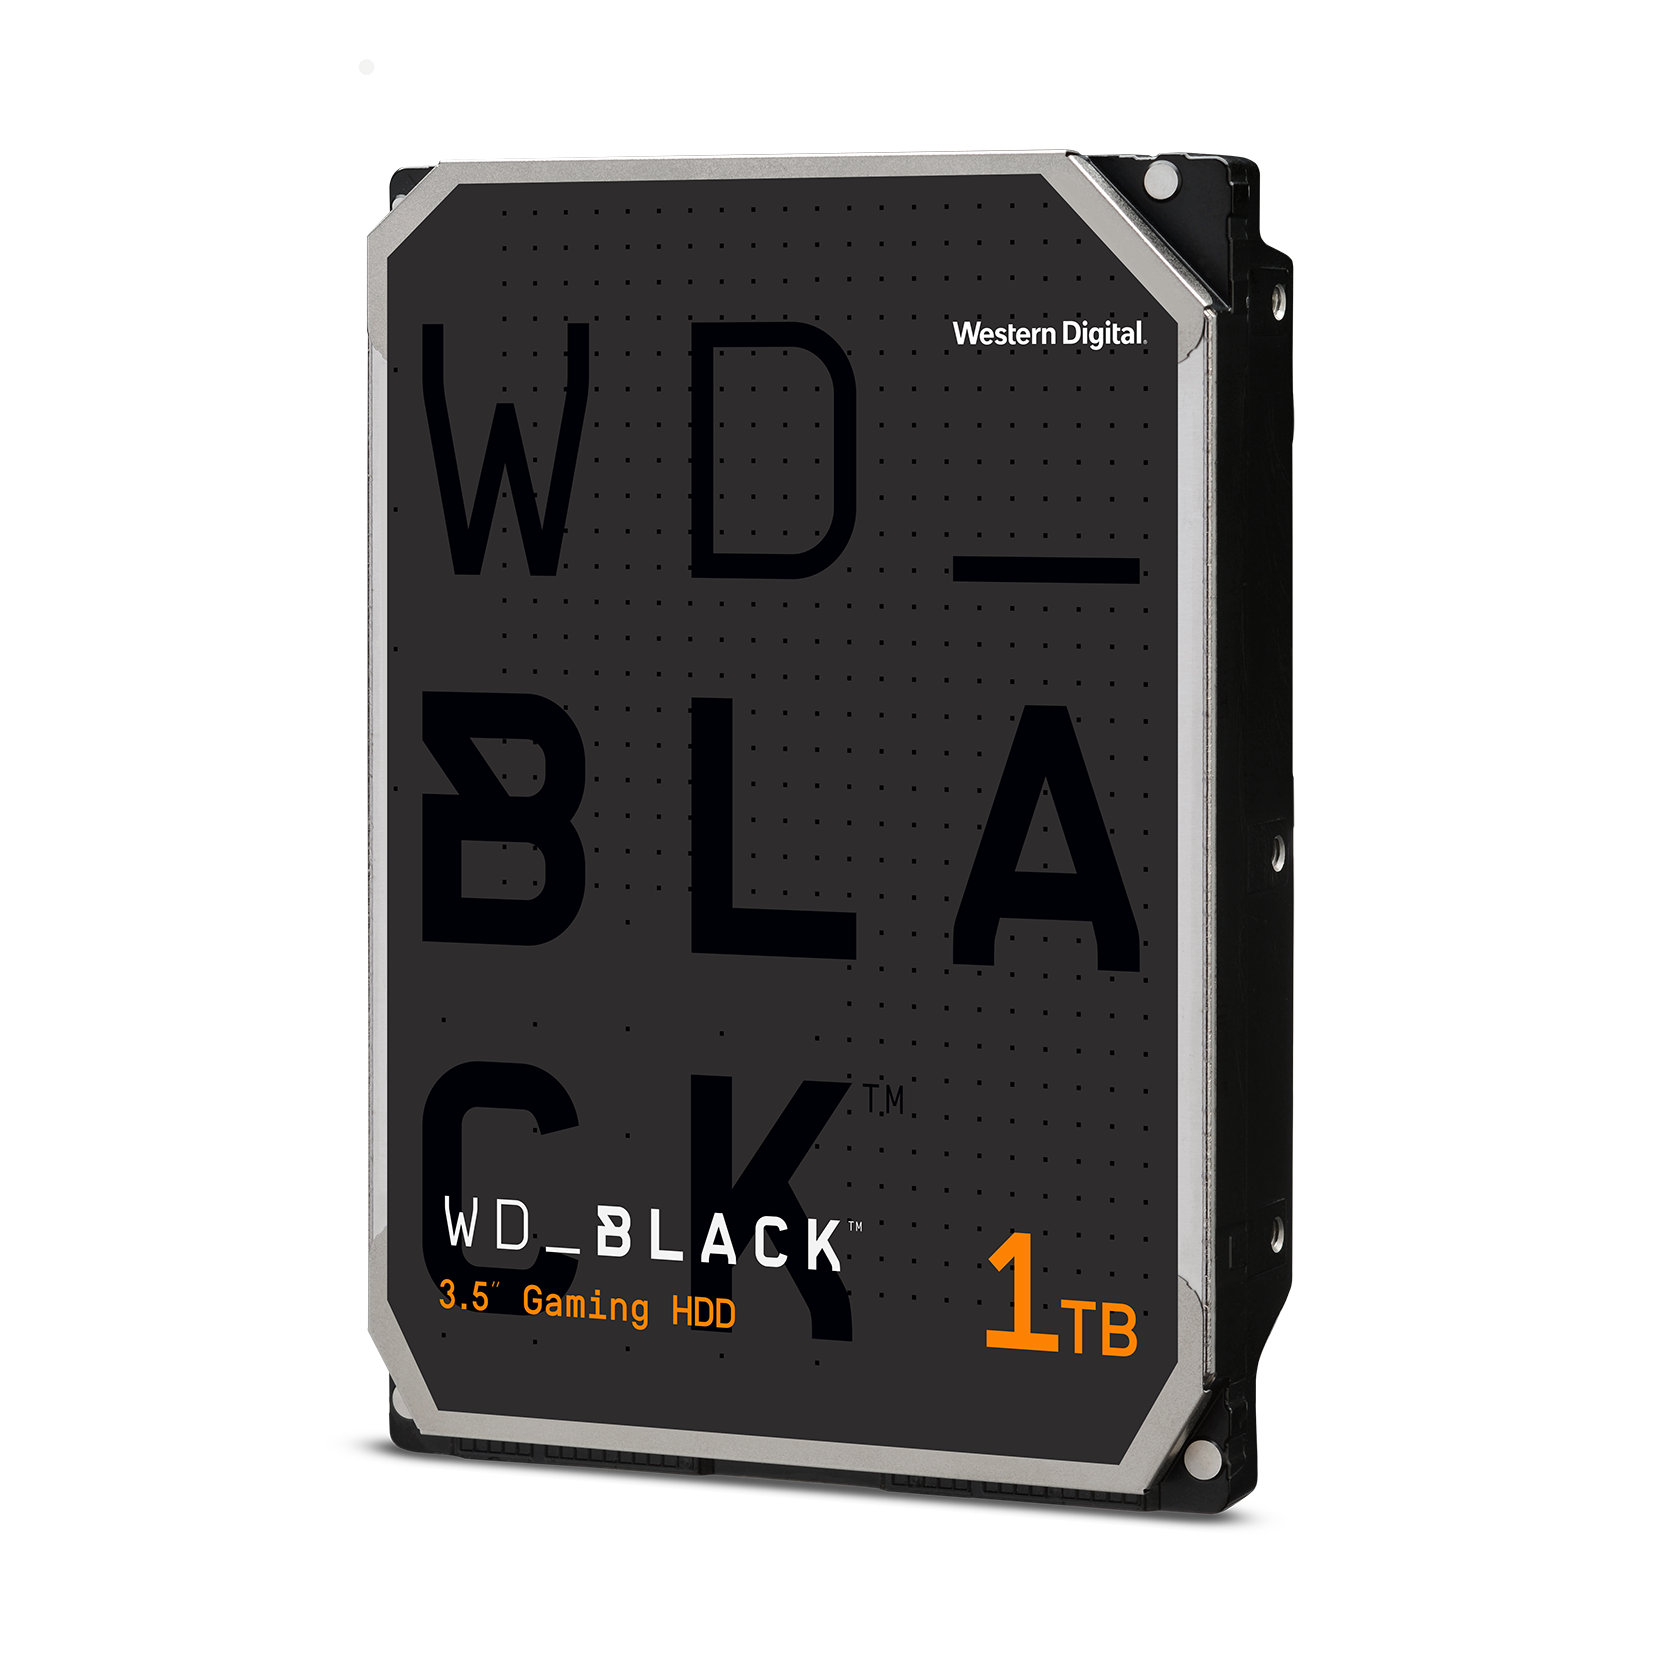 WD_BLACK™ HDD Performance Desktop Gaming Hard Drive | Western Digital